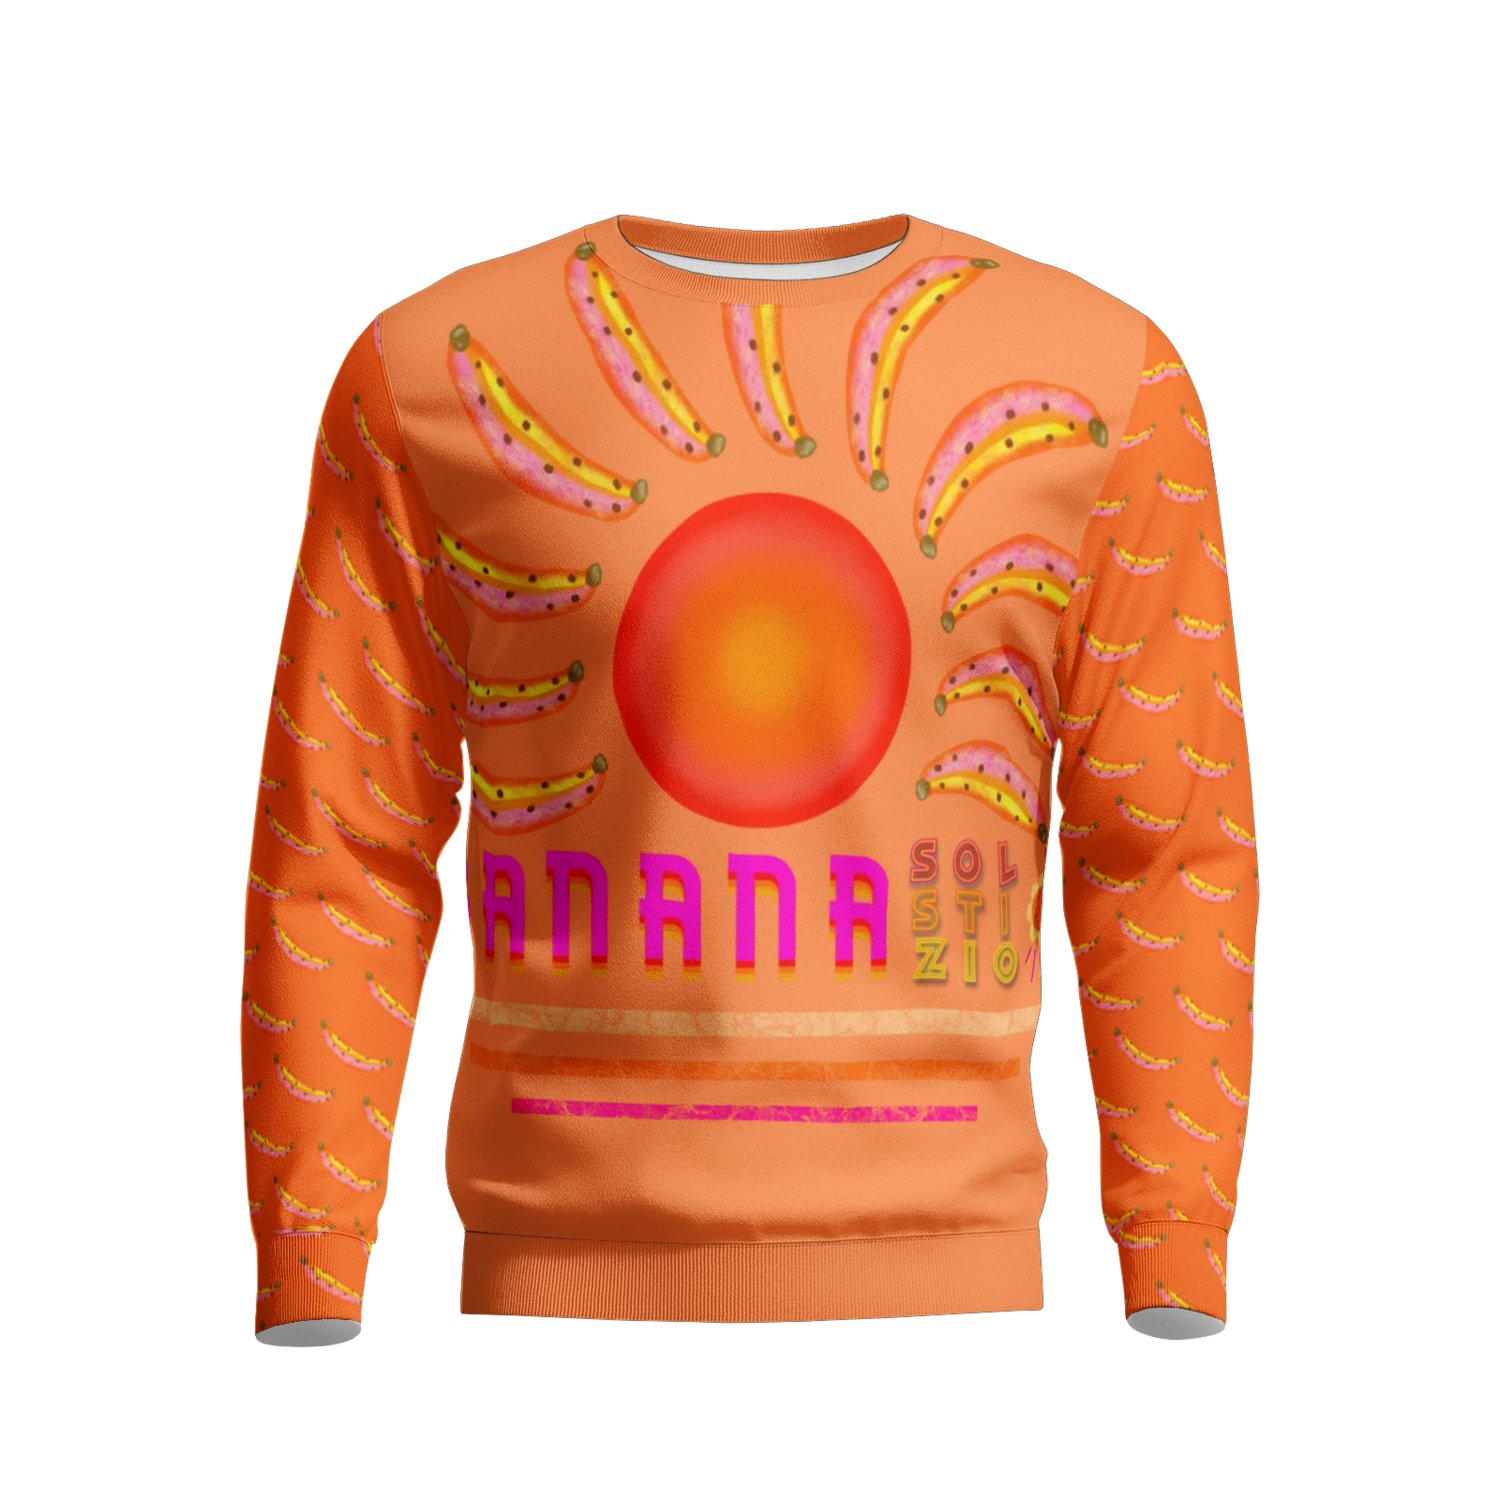 WILD BANANA Sweatshirt, Orange, Size: S